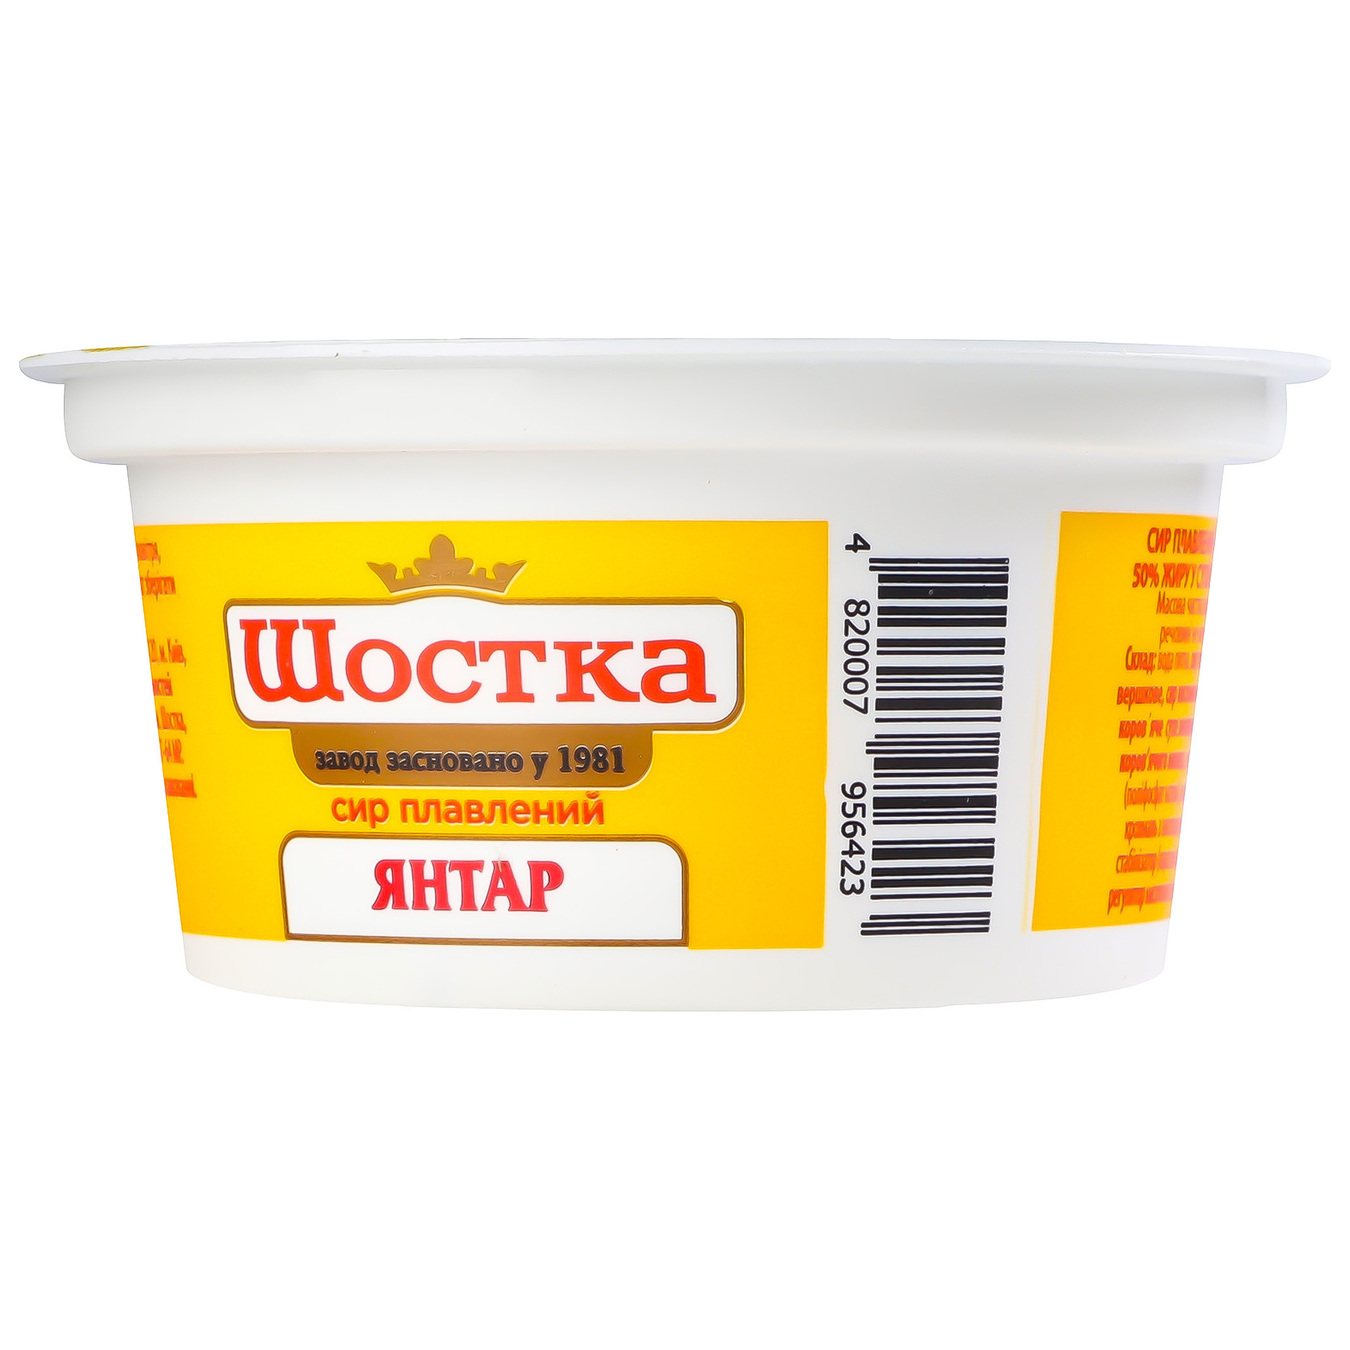 Сыр плавленый Шостка Янтар 55% 150г 2